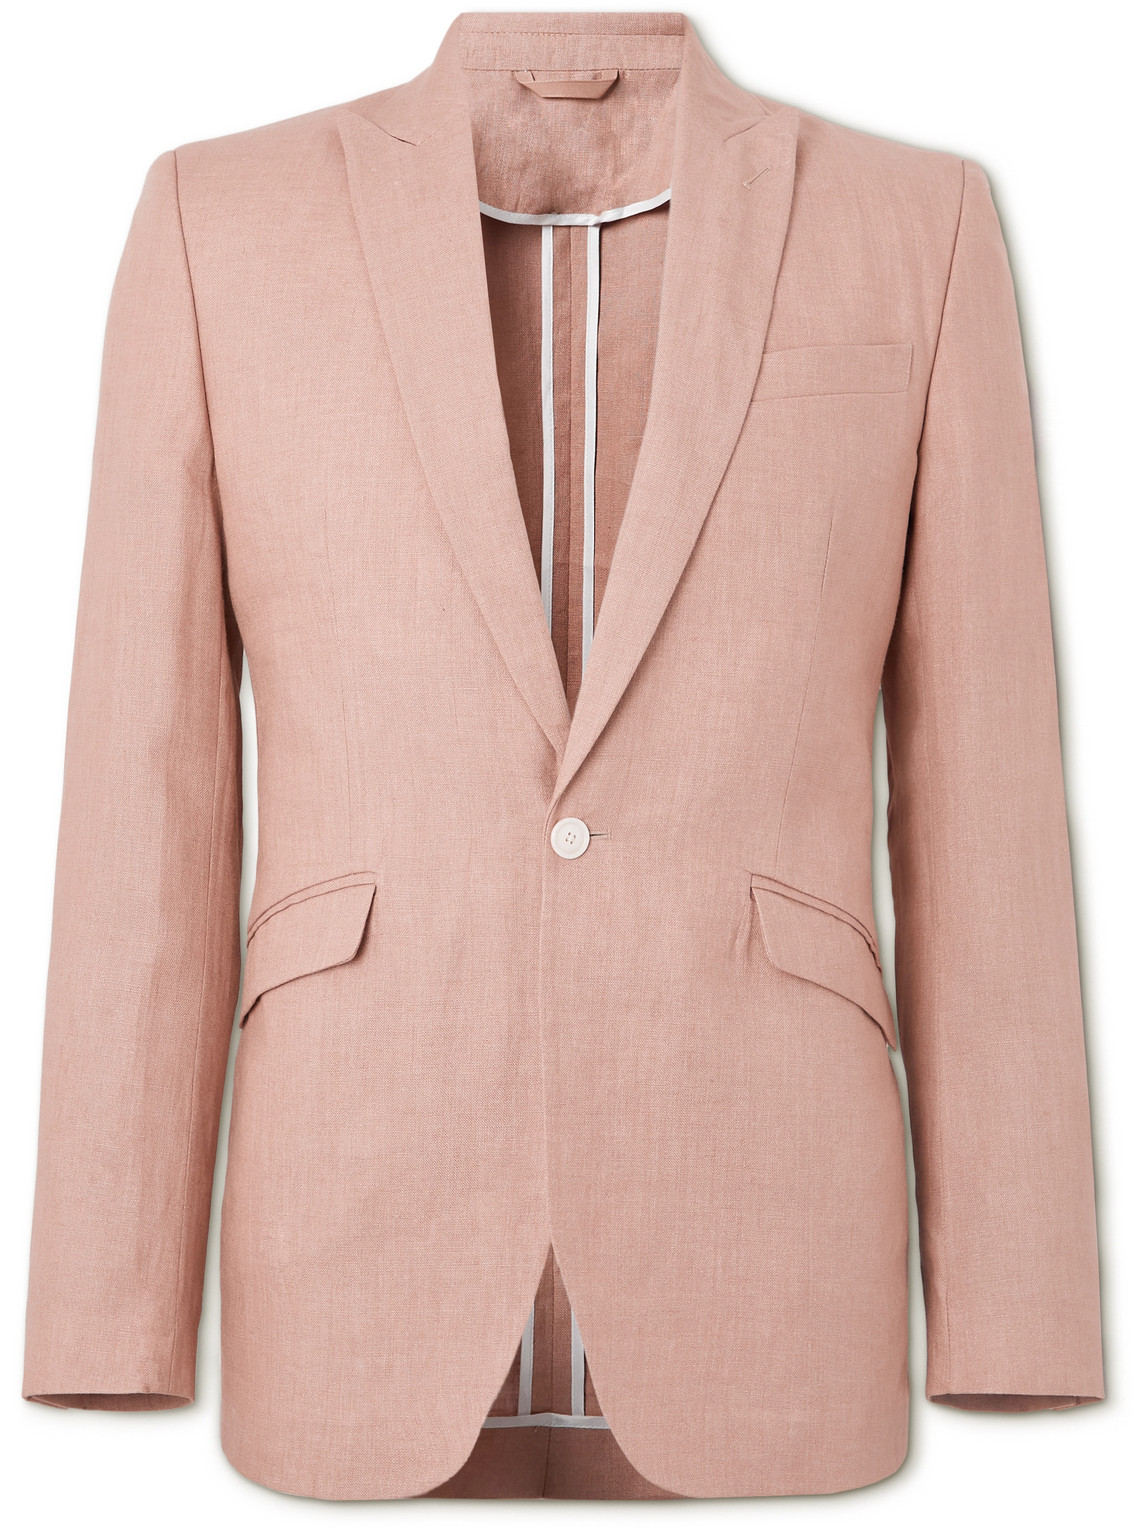 Sidmouth Ebury Slim-Fit Herringbone Linen Suit Jacket